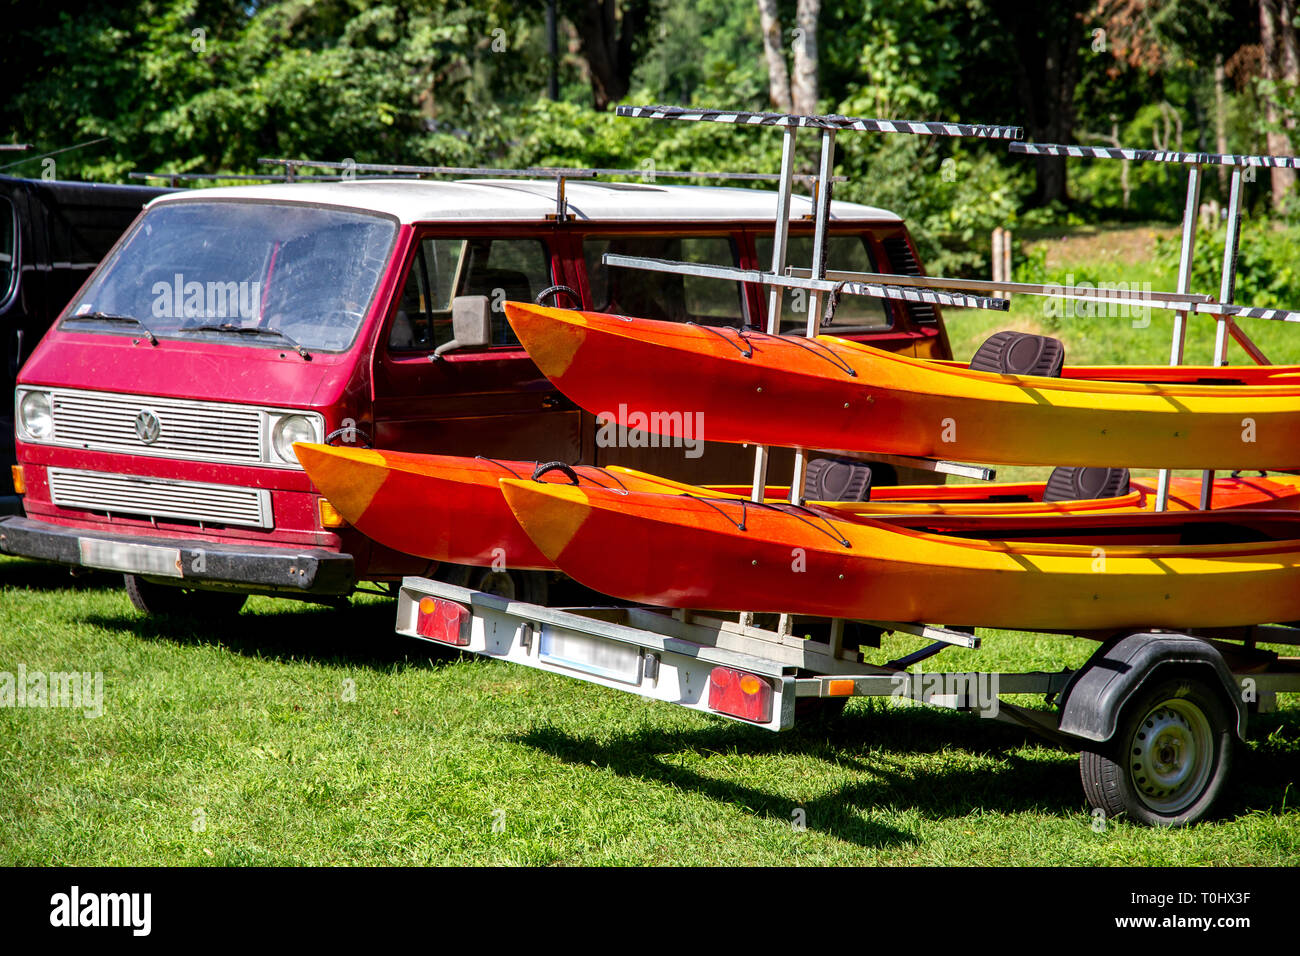 [Get 24+] Kayak And Boat Rental Near Me